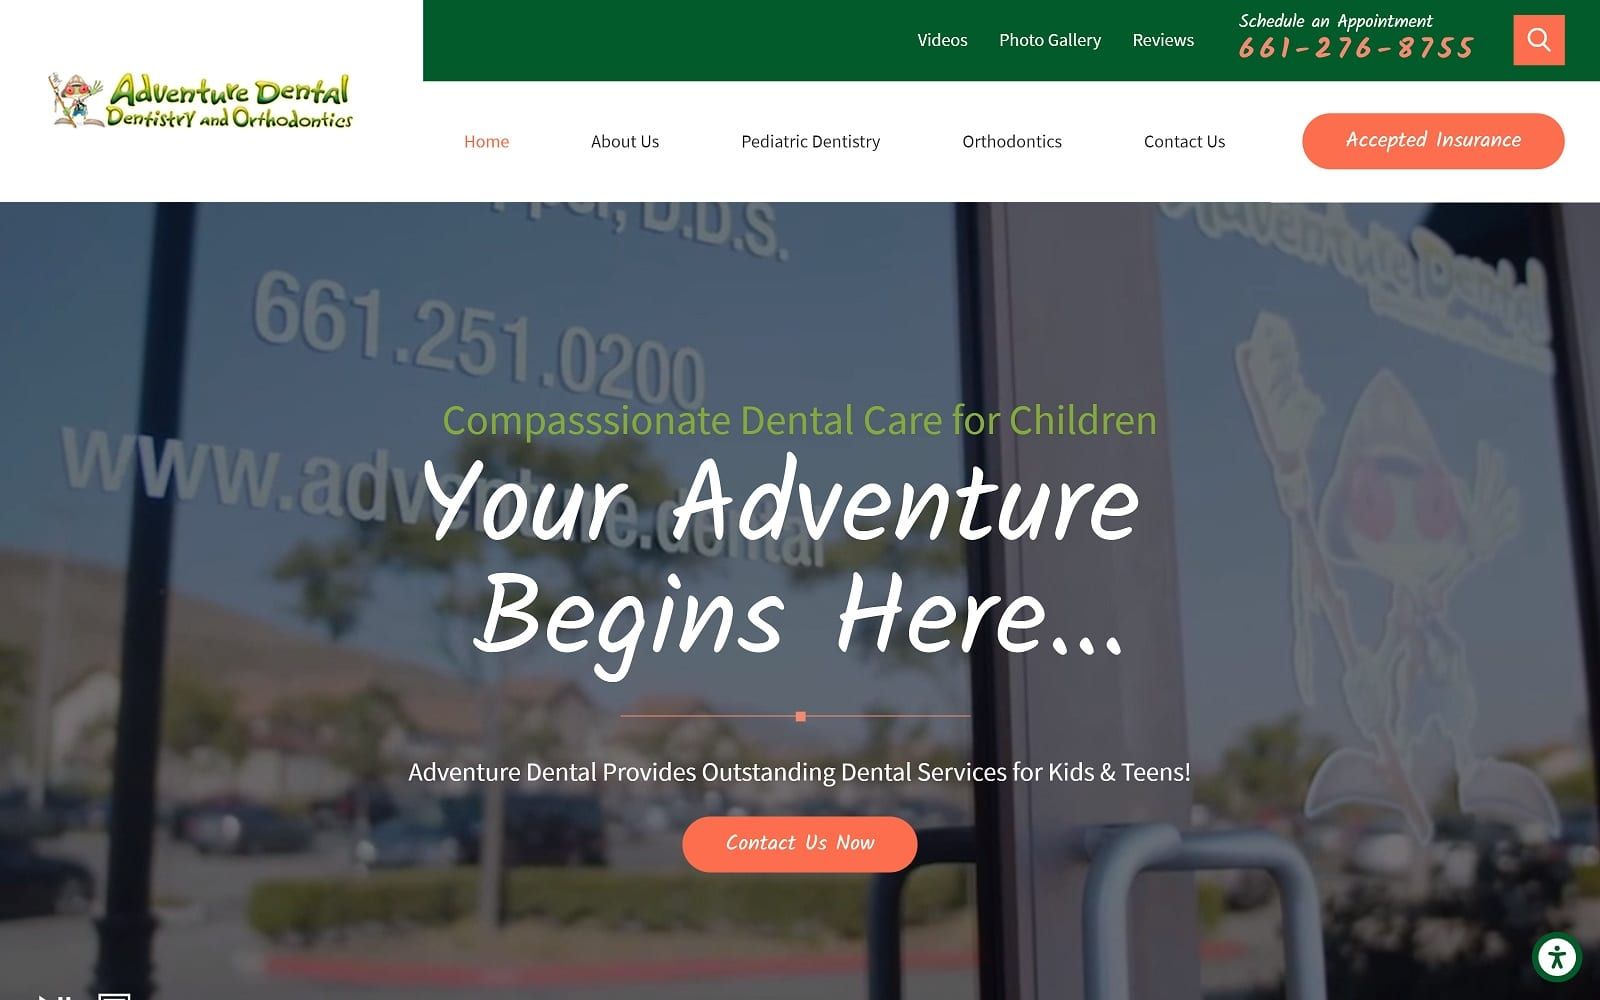 The screenshot of adventure dental kidsadventuredental. Com website